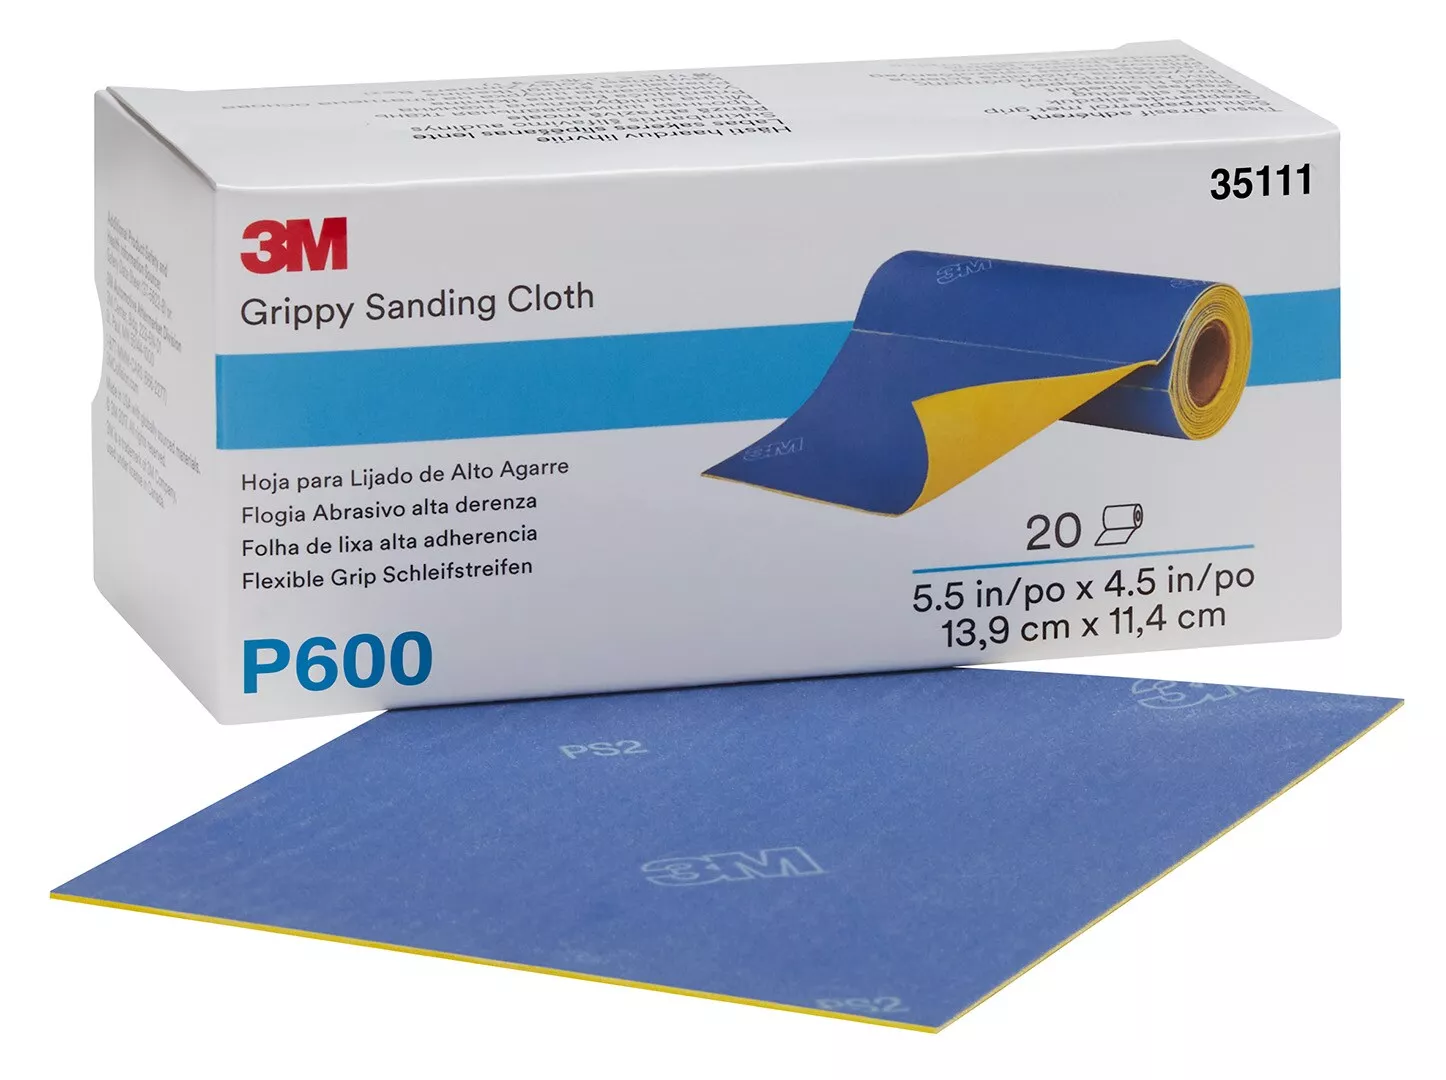 3M™ Grippy Sanding Cloth 35111, P600 Grade, 5.5 in x 4.5 in, 20
Sheets/Roll, 4 Rolls/Case